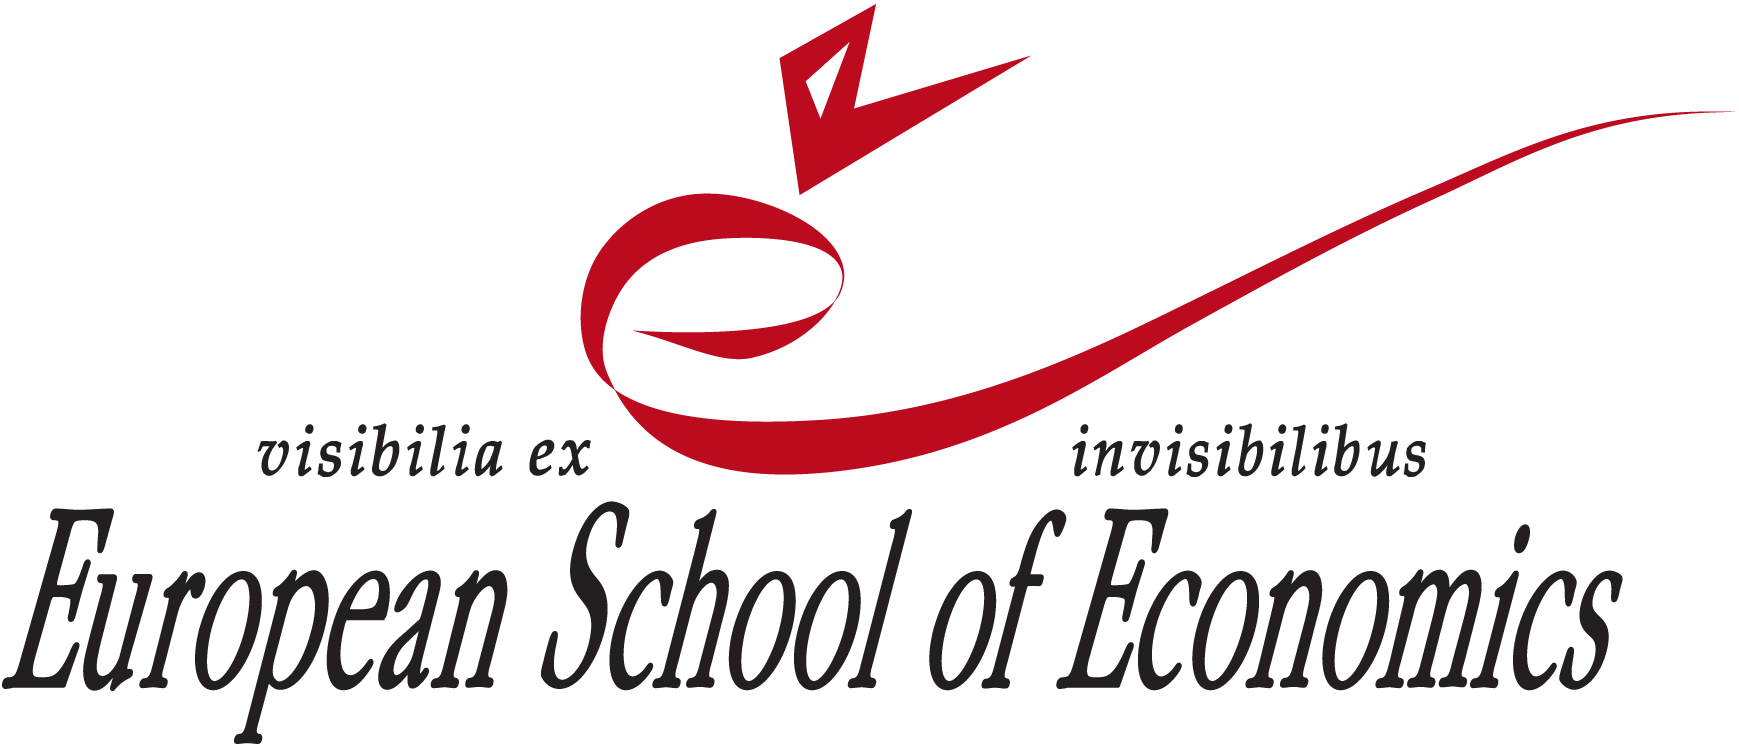 ESE Londra ( European School of Economics ) Logo Görseli